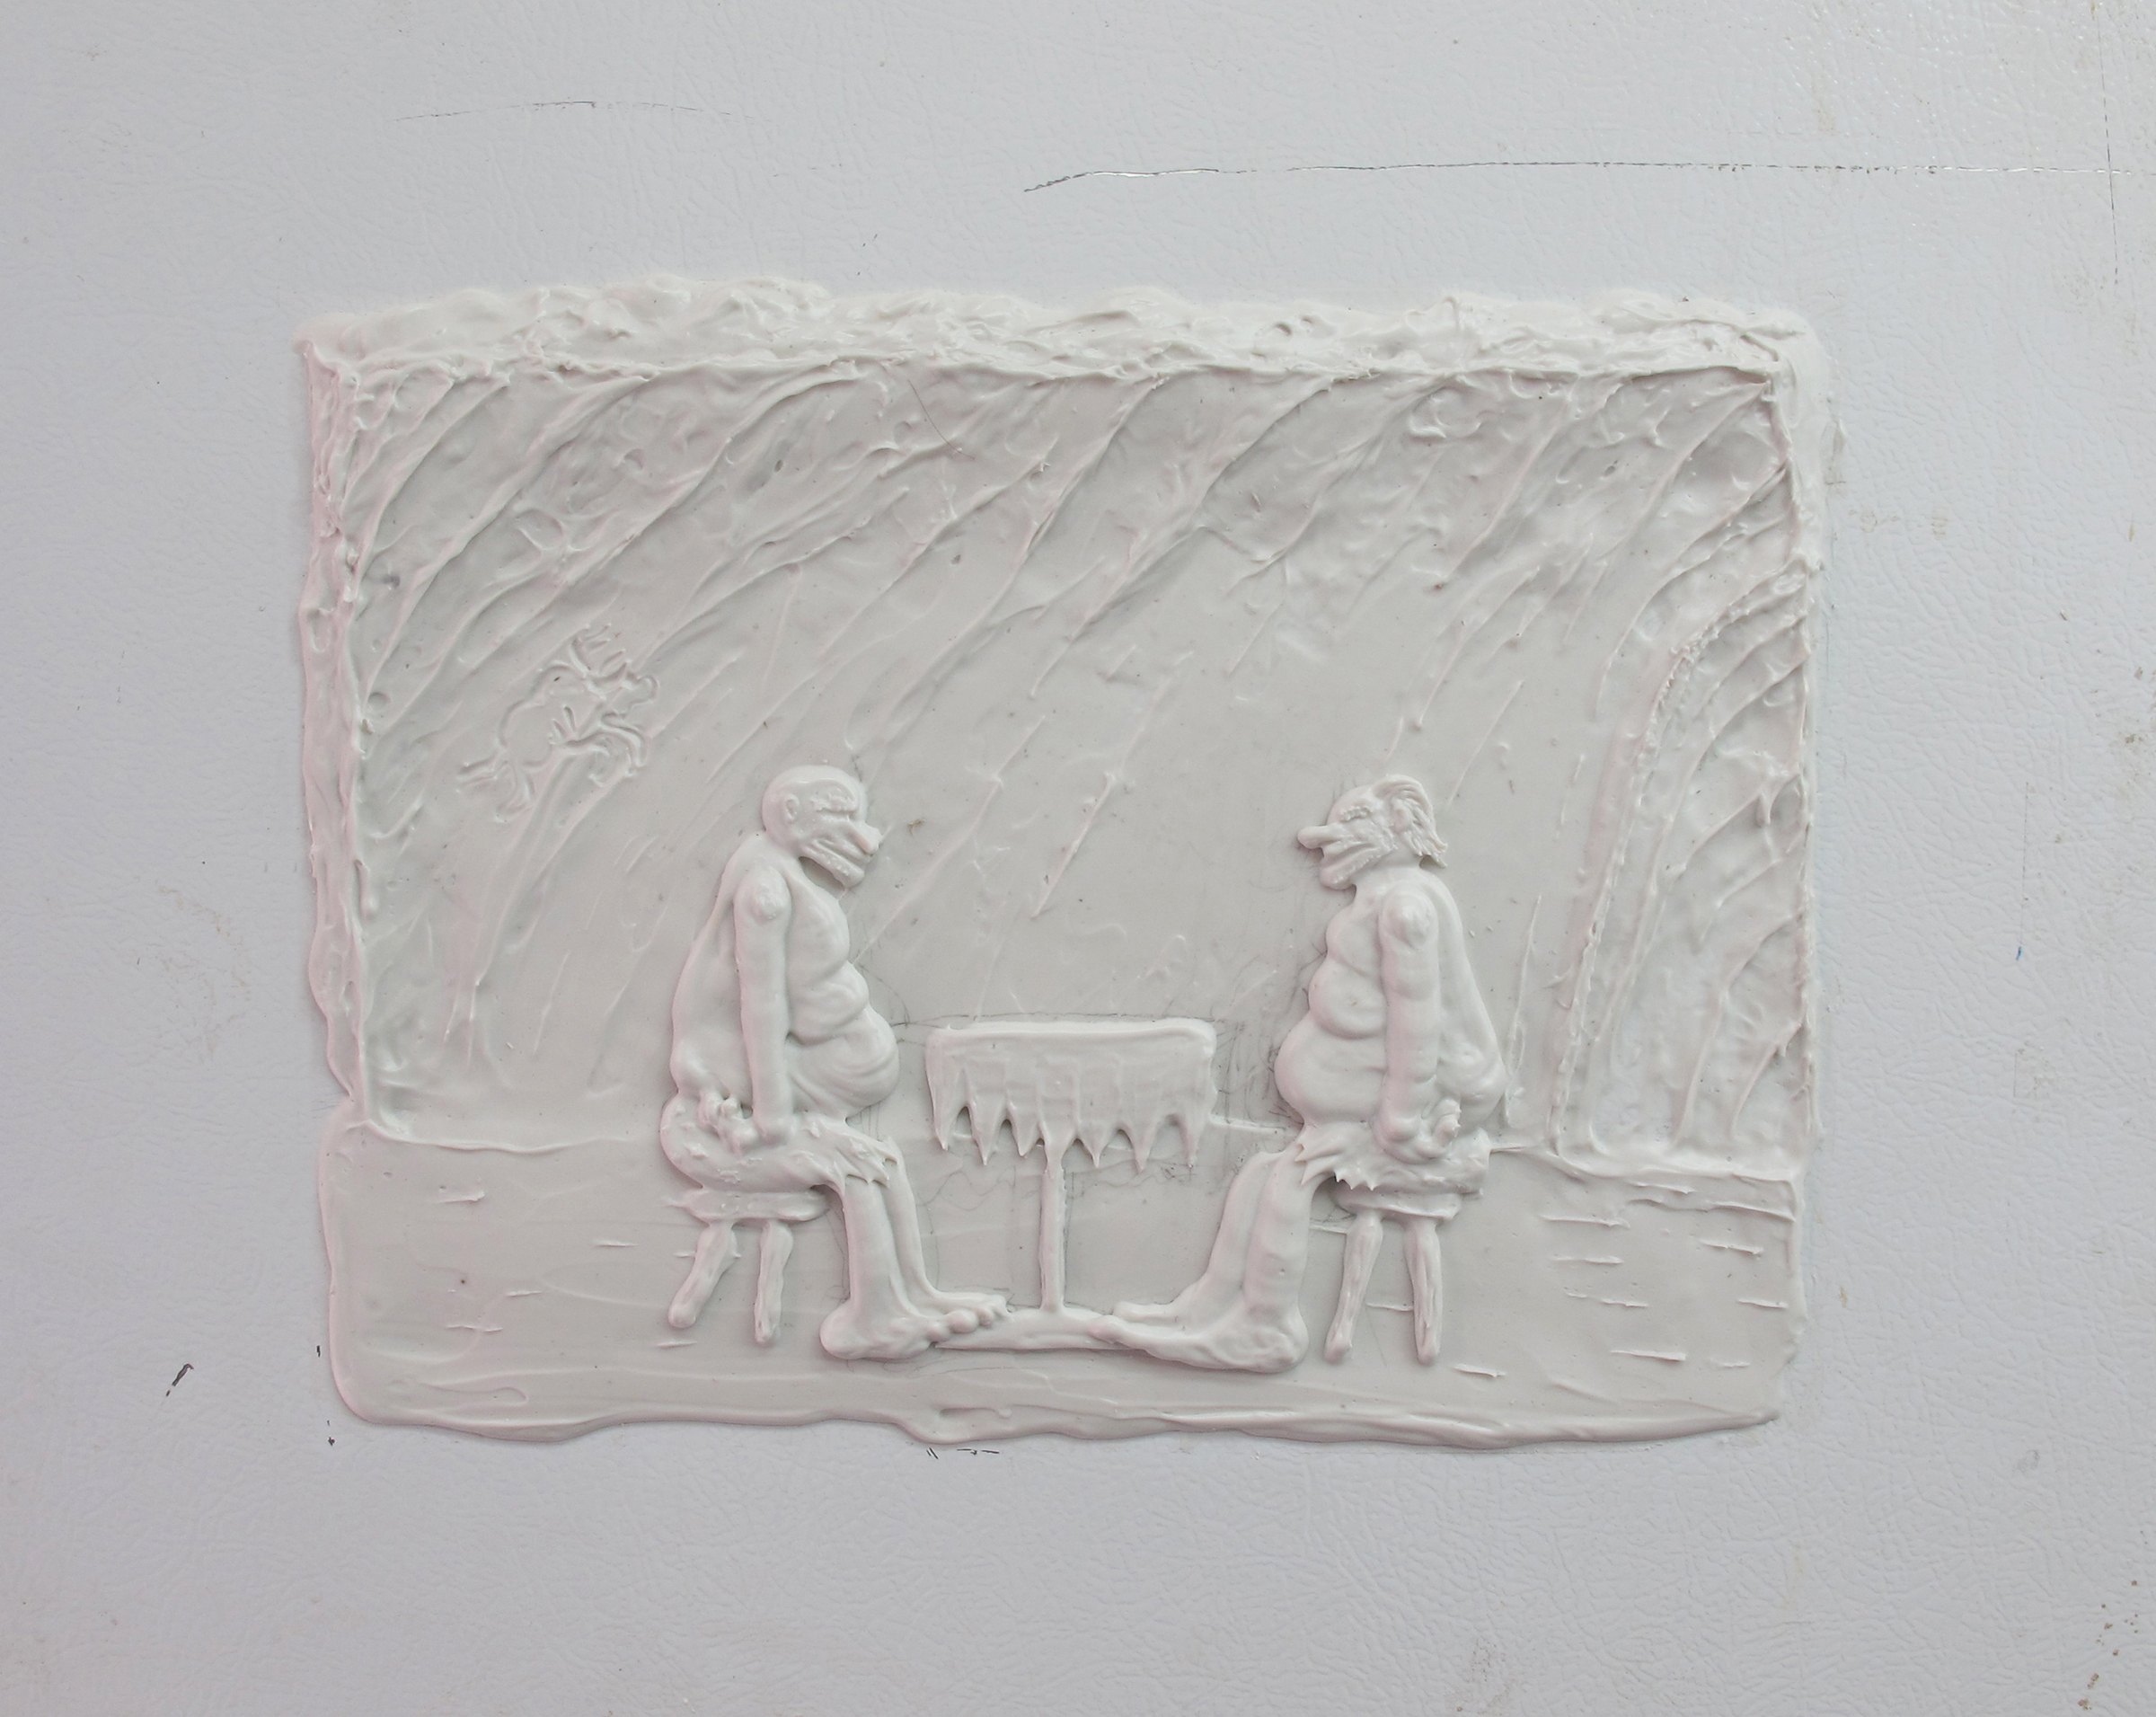  Michael Assiff,&nbsp; Fridge  (detail), 2015, plastic on refrigerator, 60 x 28 x 28 in 